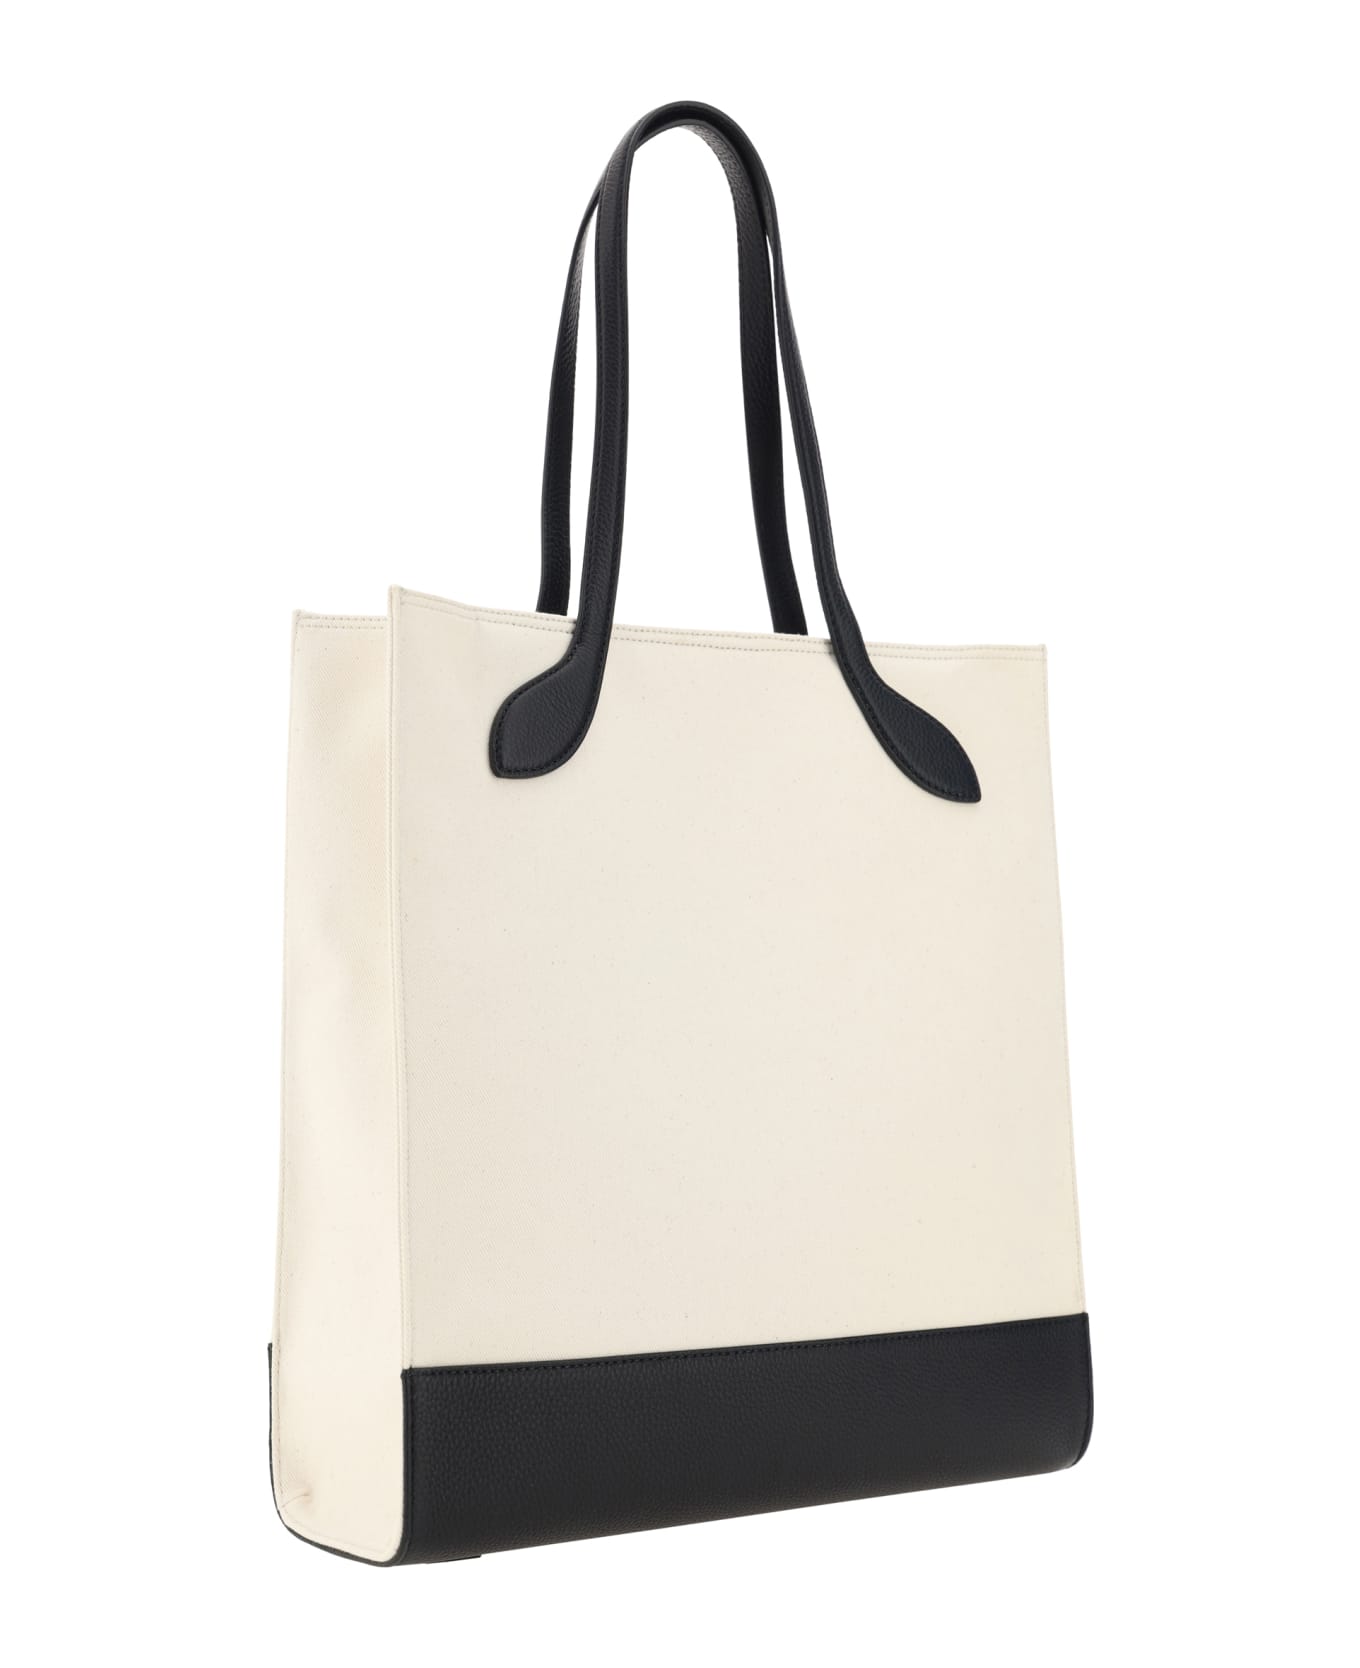 Bally Tote Shoulder Bag - White